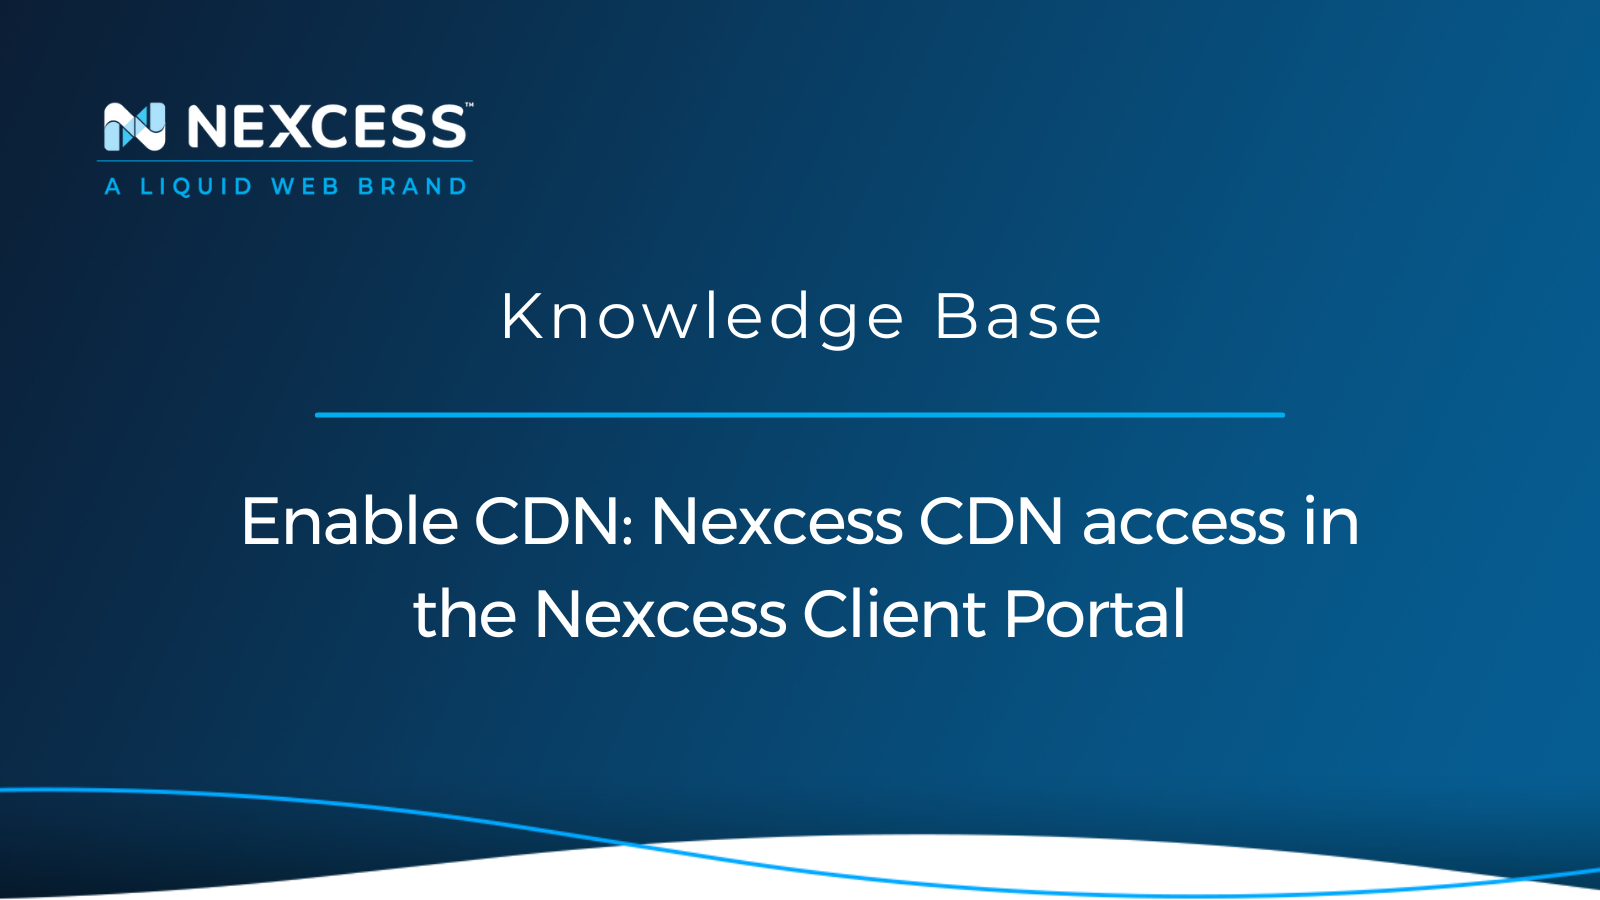 Enable CDN: Nexcess CDN access in the Nexcess Client Portal